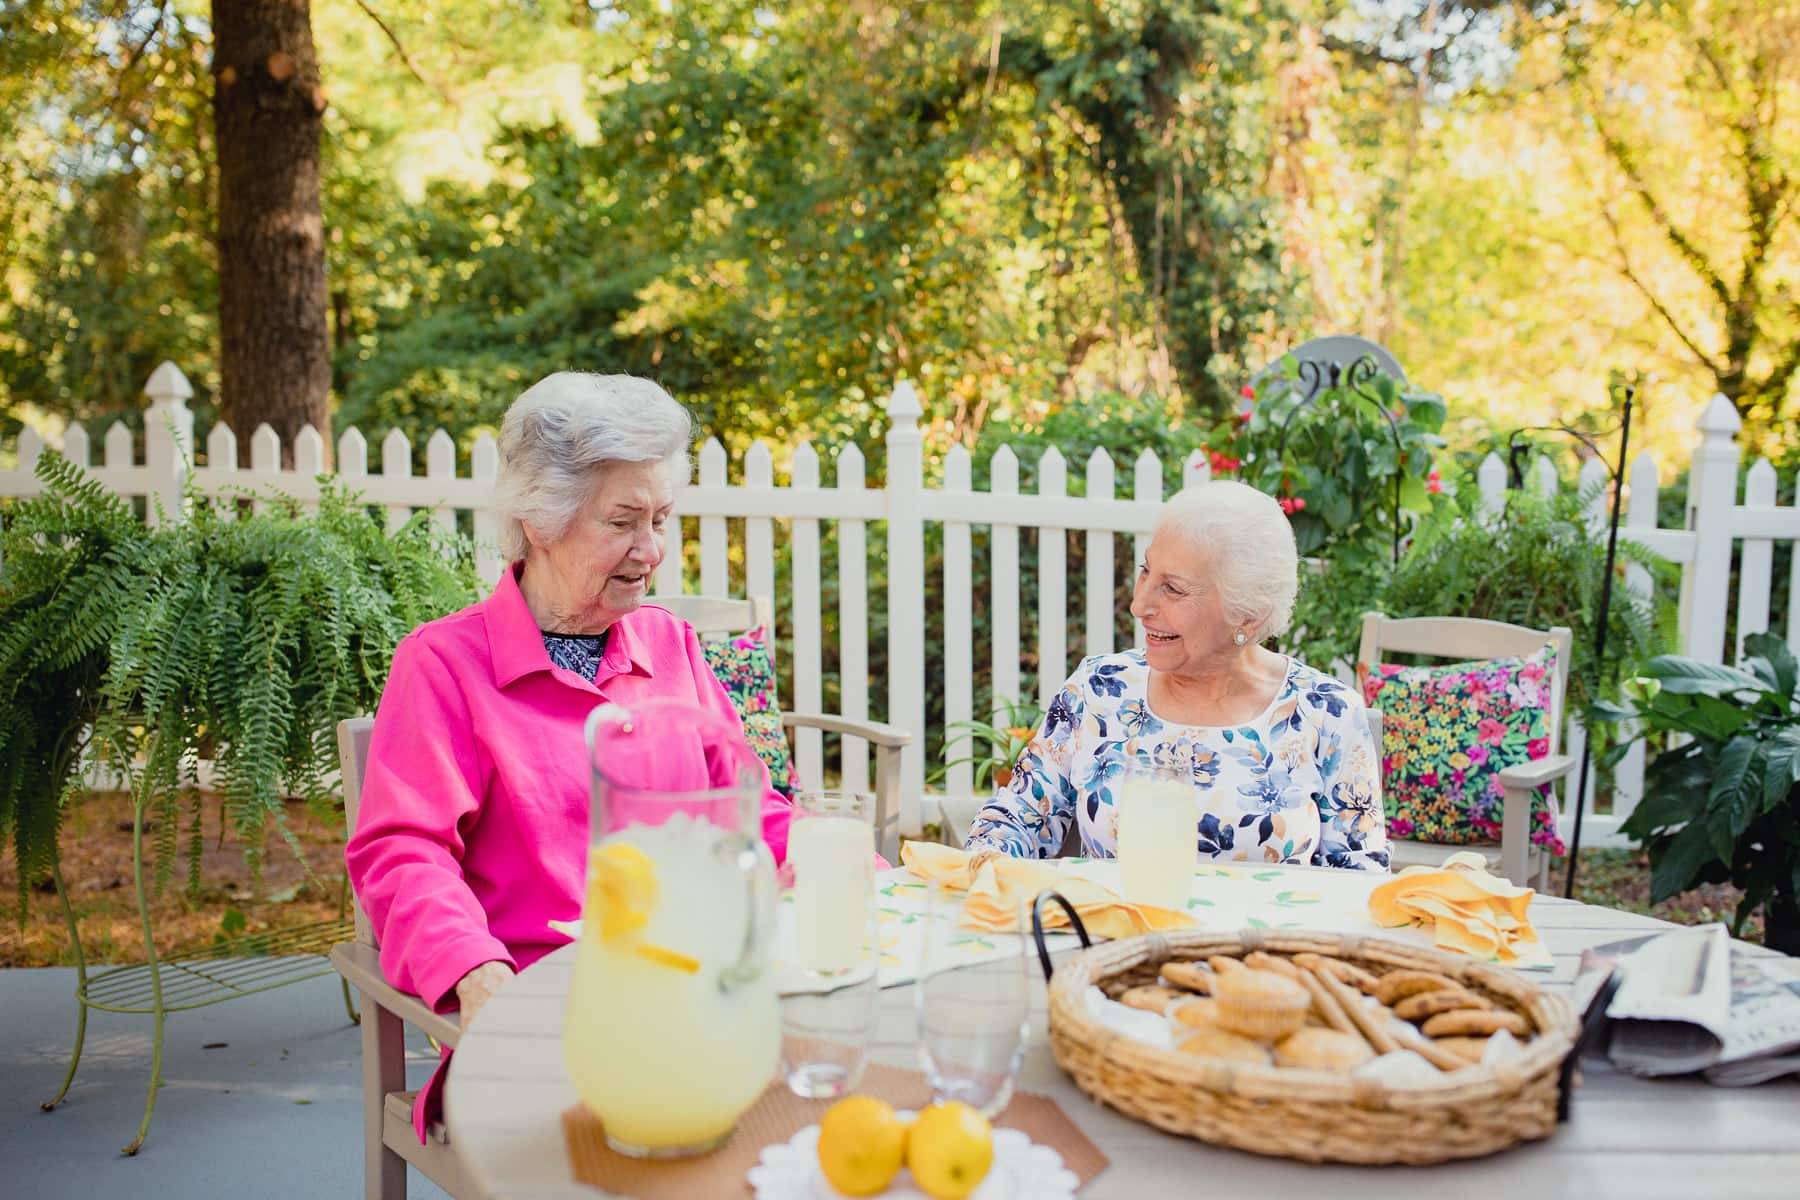 elderly women enjoying lemonade and snacks on patio